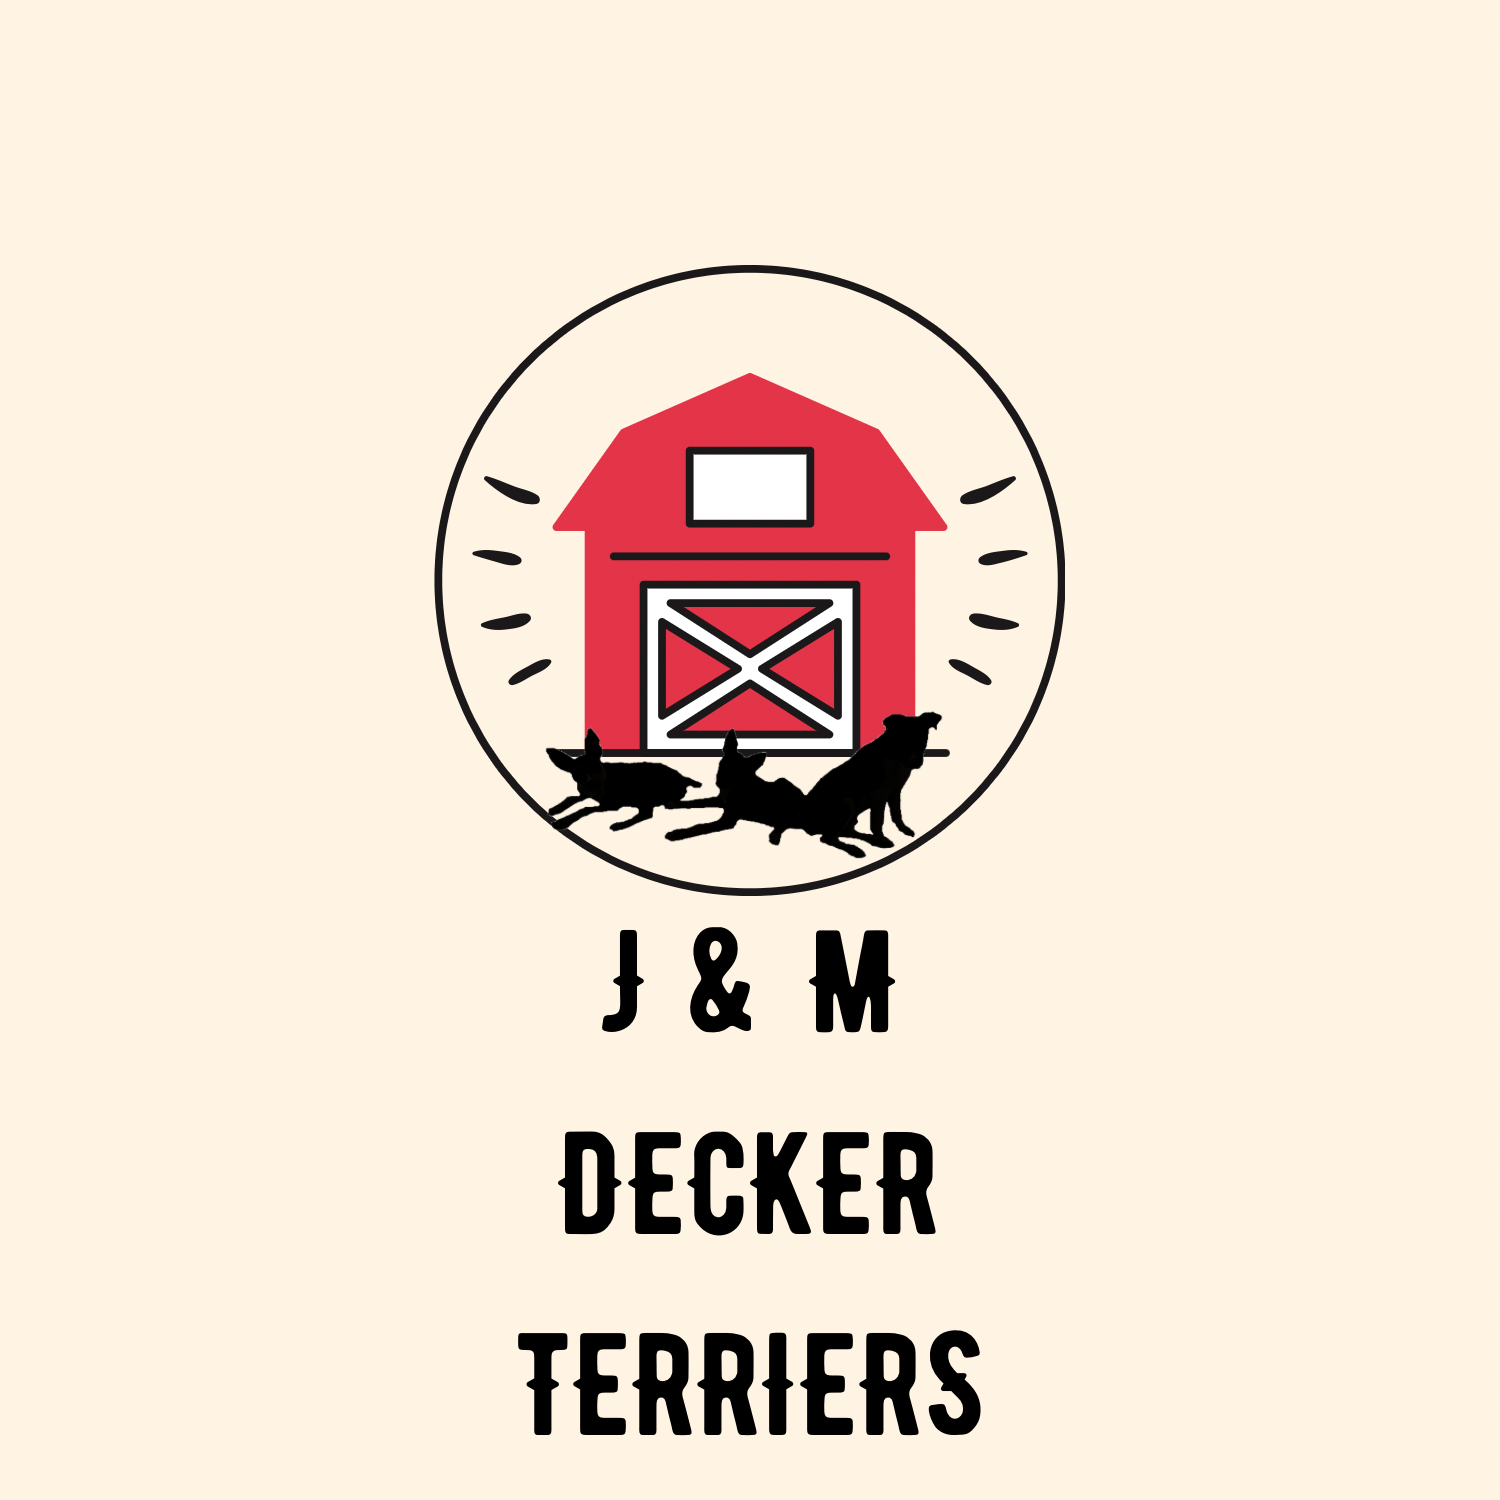 J & M Decker Terriers